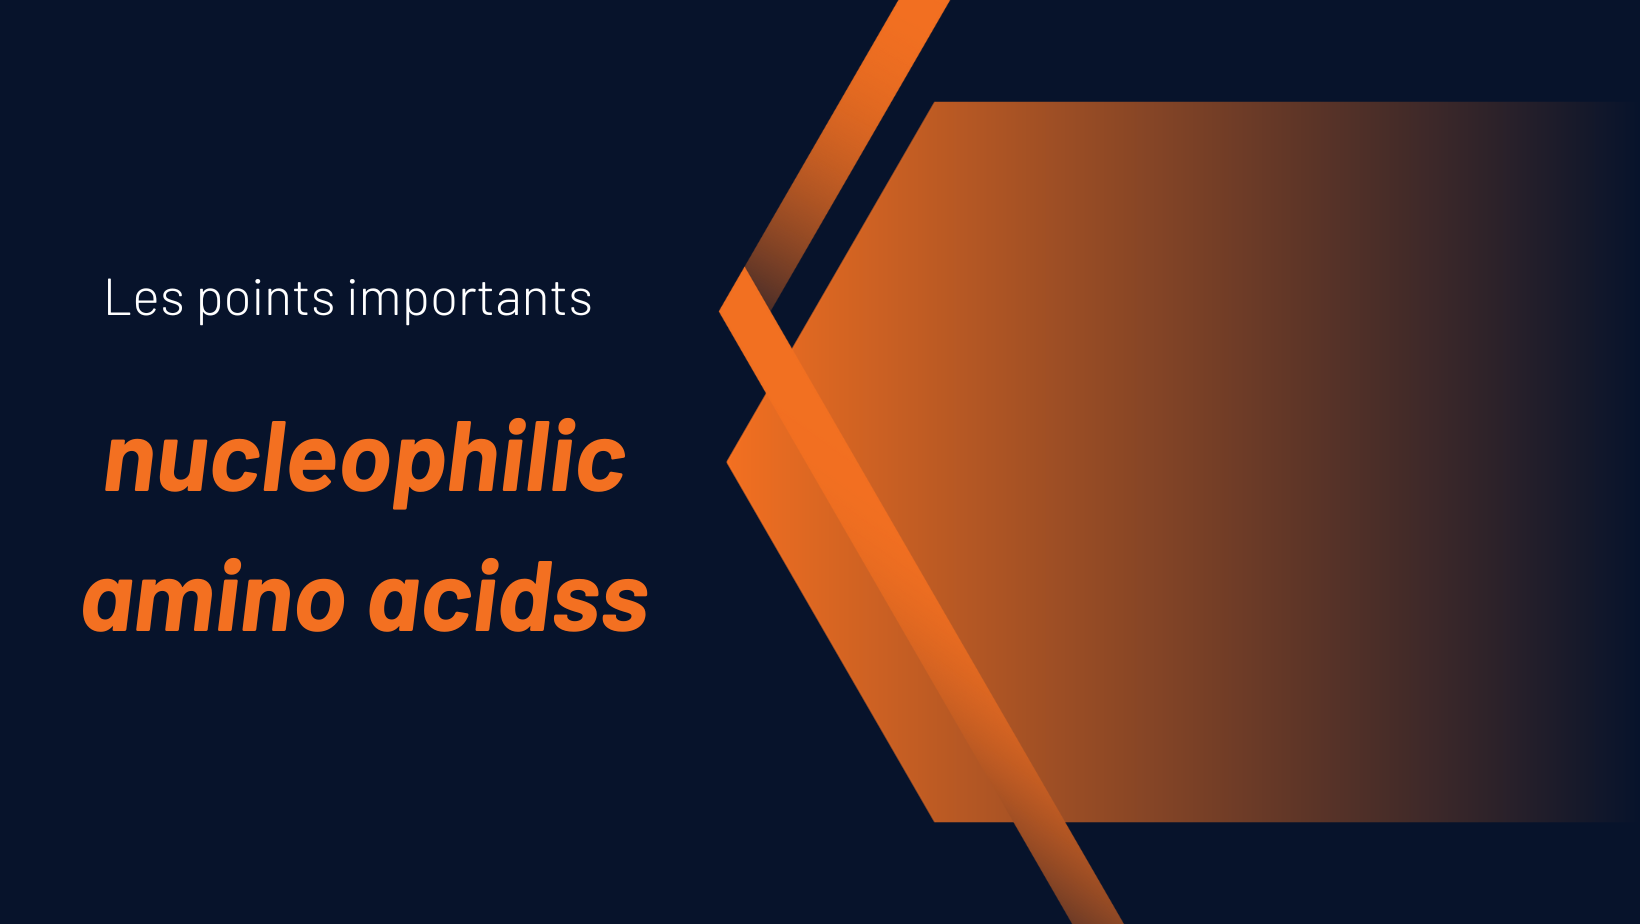 nucleophilic amino acids | Les points importants